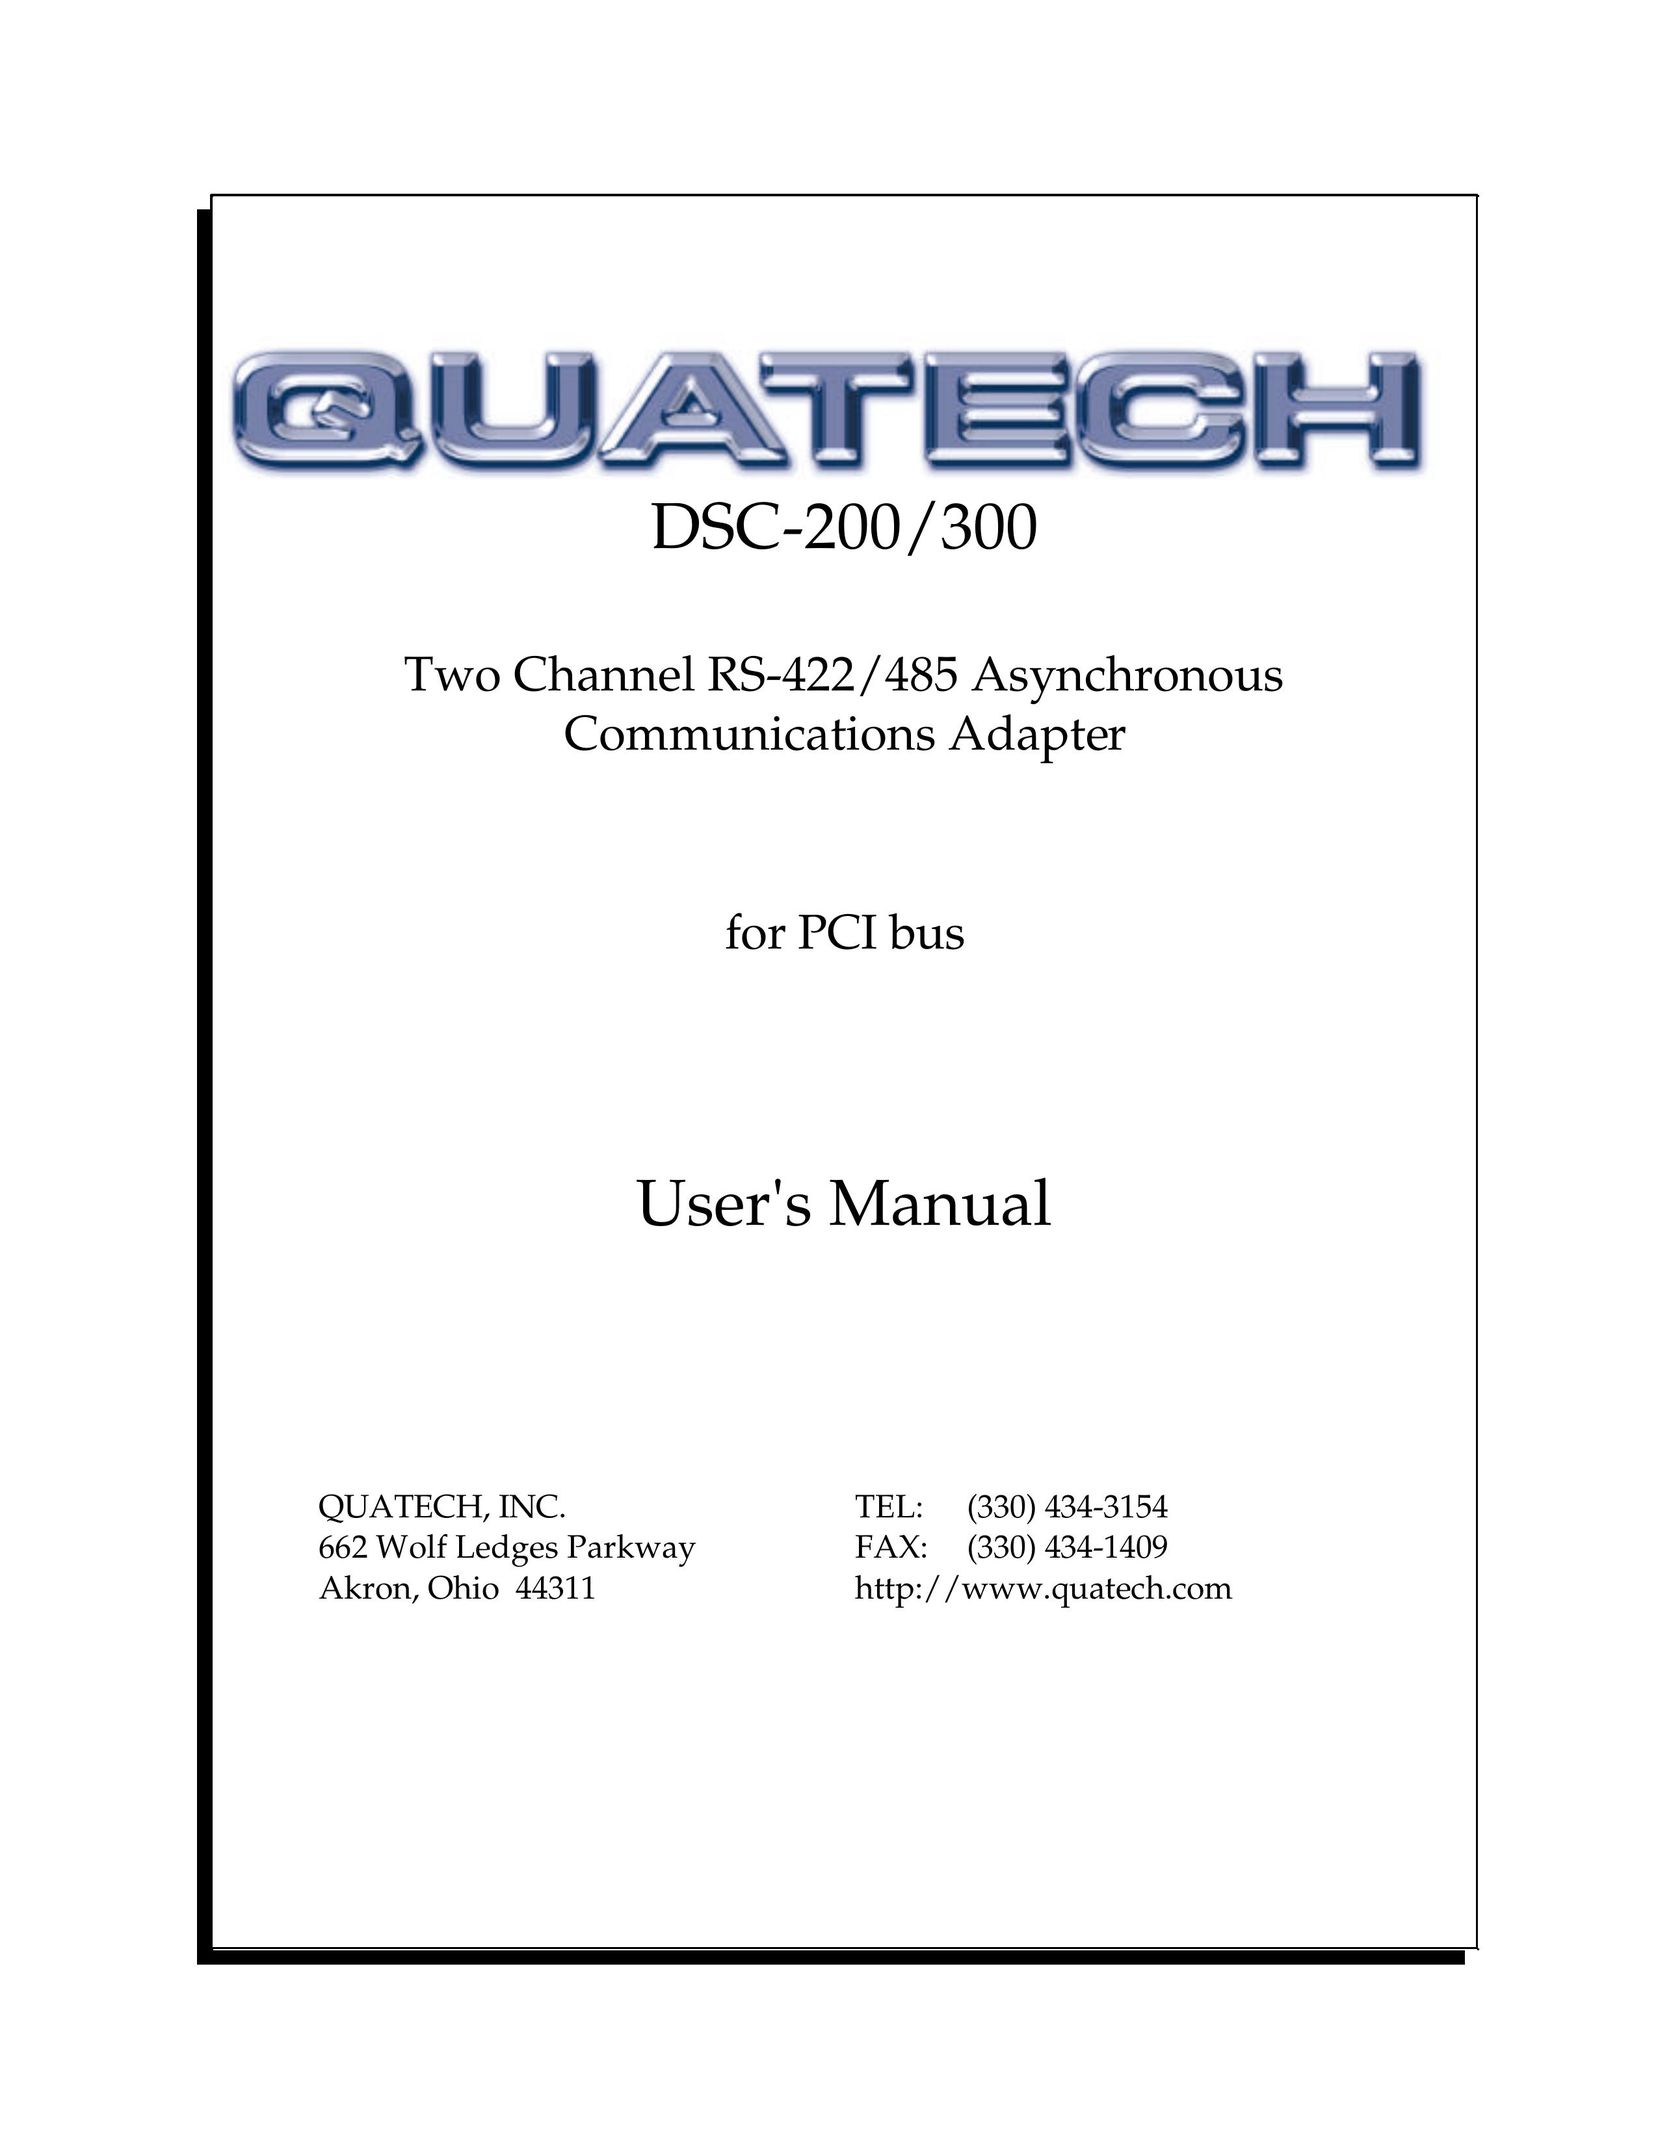 Quatech DSC-300 Network Card User Manual